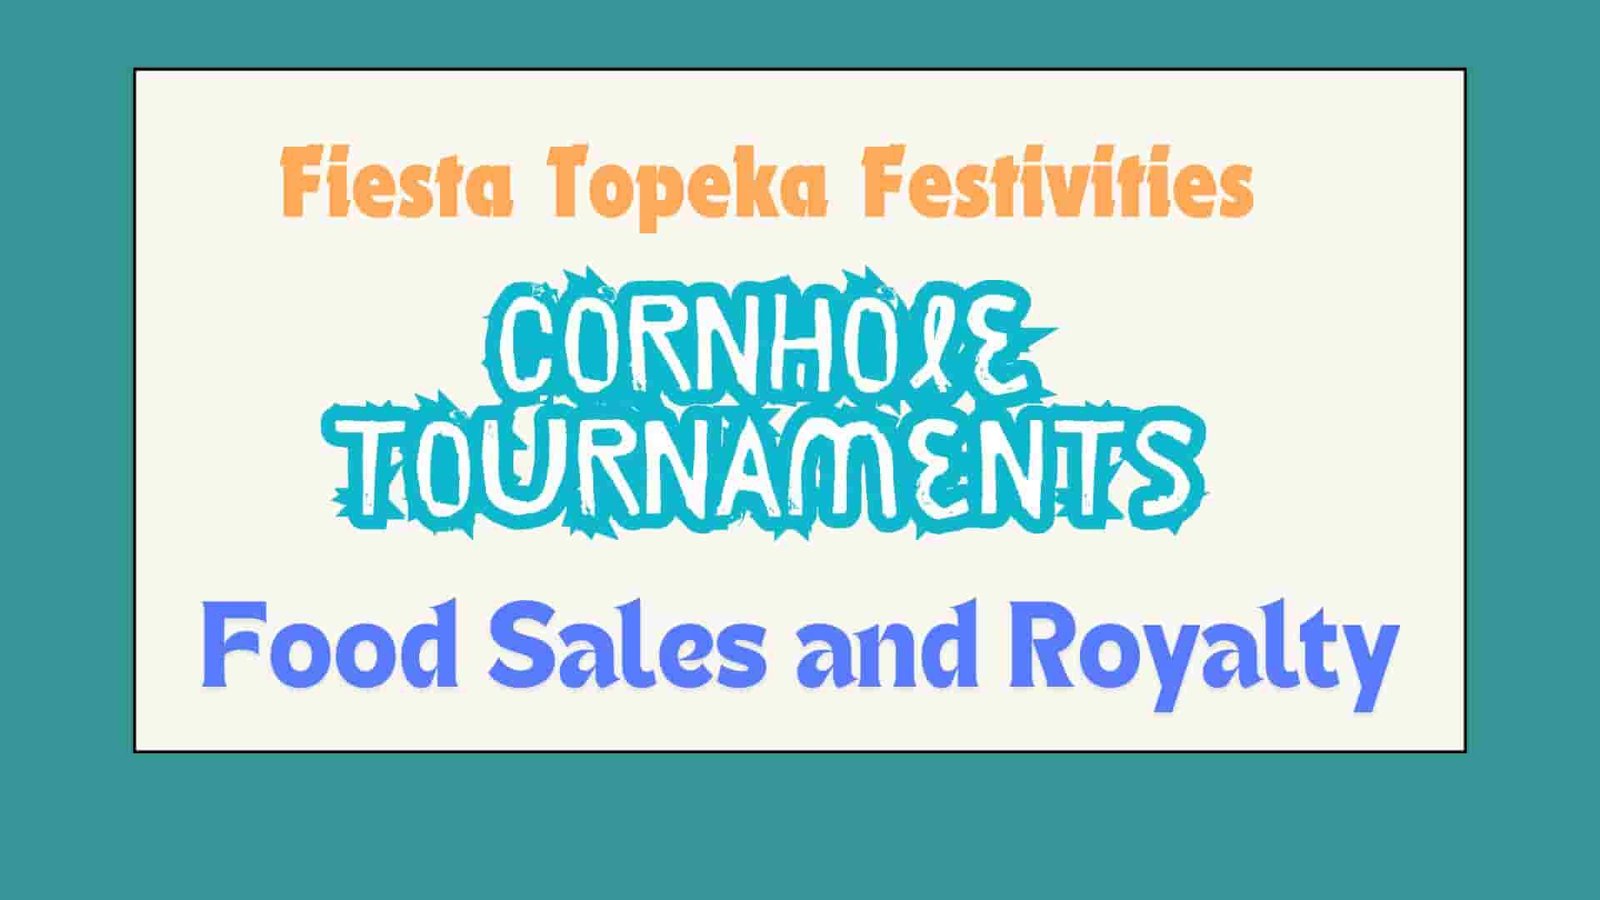 Fiesta Topeka Festivities Cornhole Tournaments Food Sales and Royalty